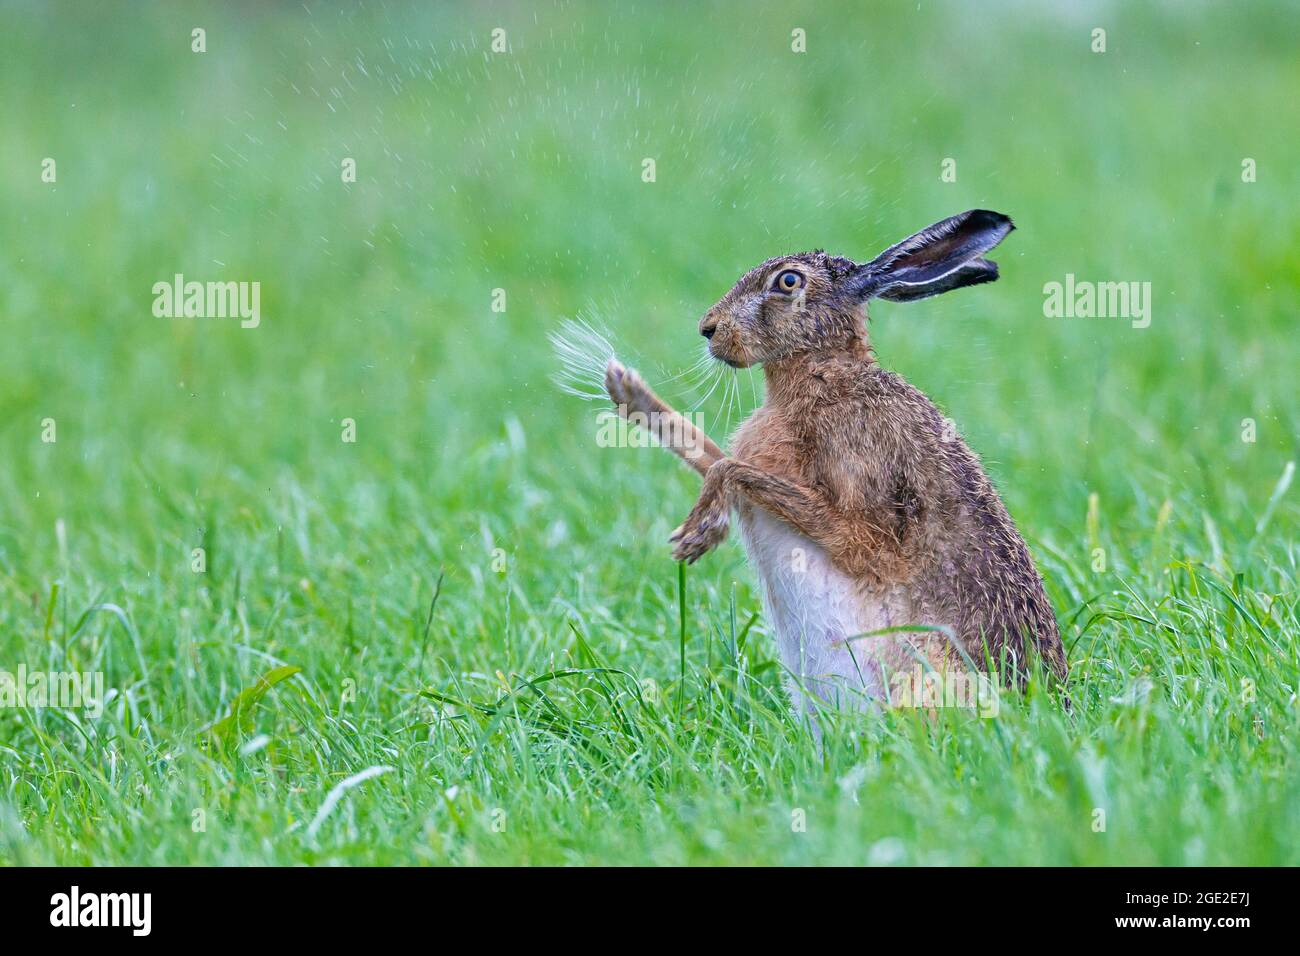 European Brown Hare (Lepus europaeus) shaking itself after rain. Germany Stock Photo